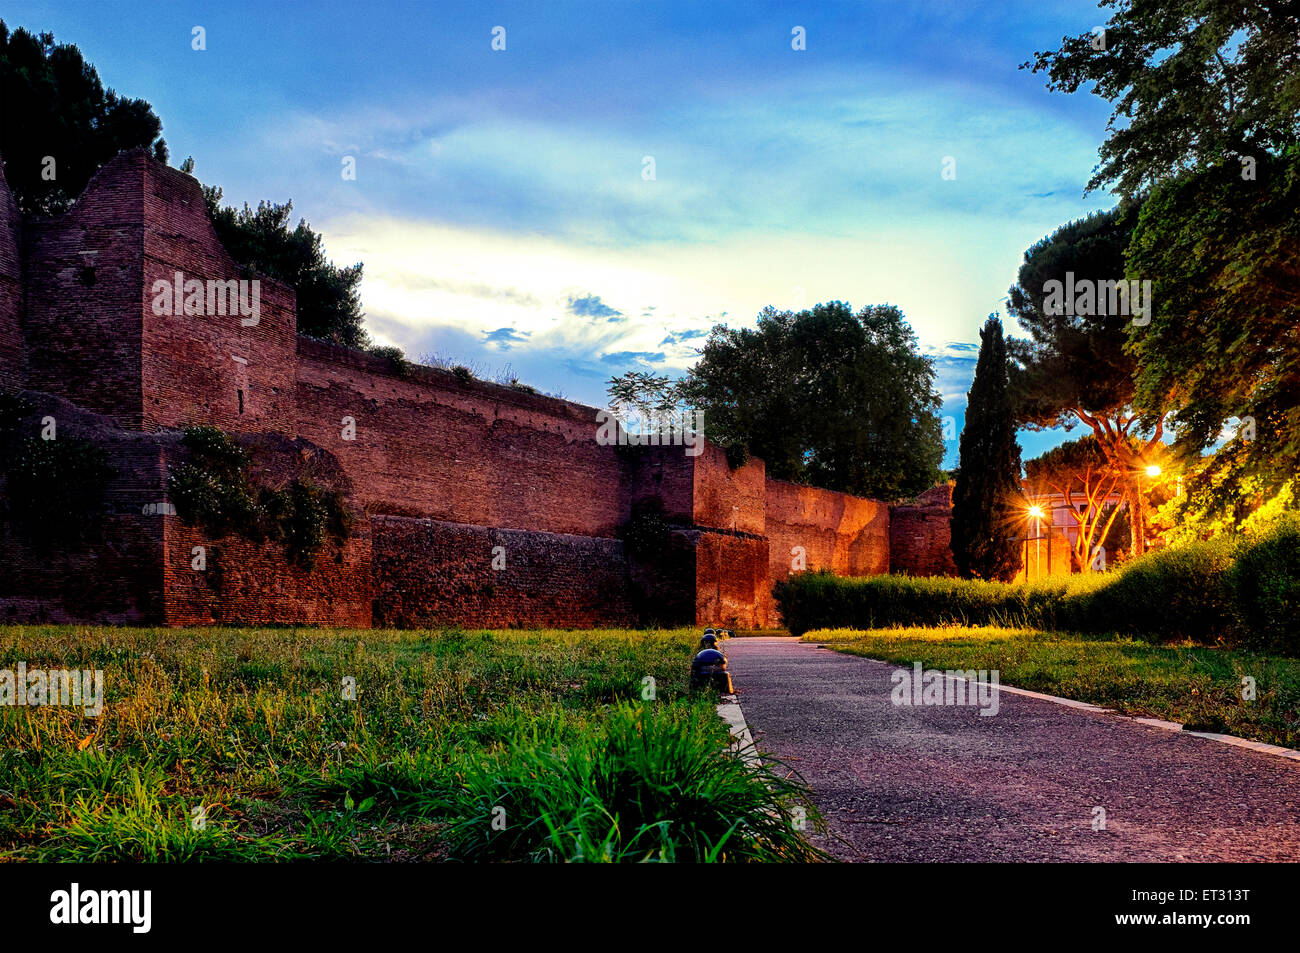 Parco integrato delle mura aureliane, Rome Italy Stock Photo